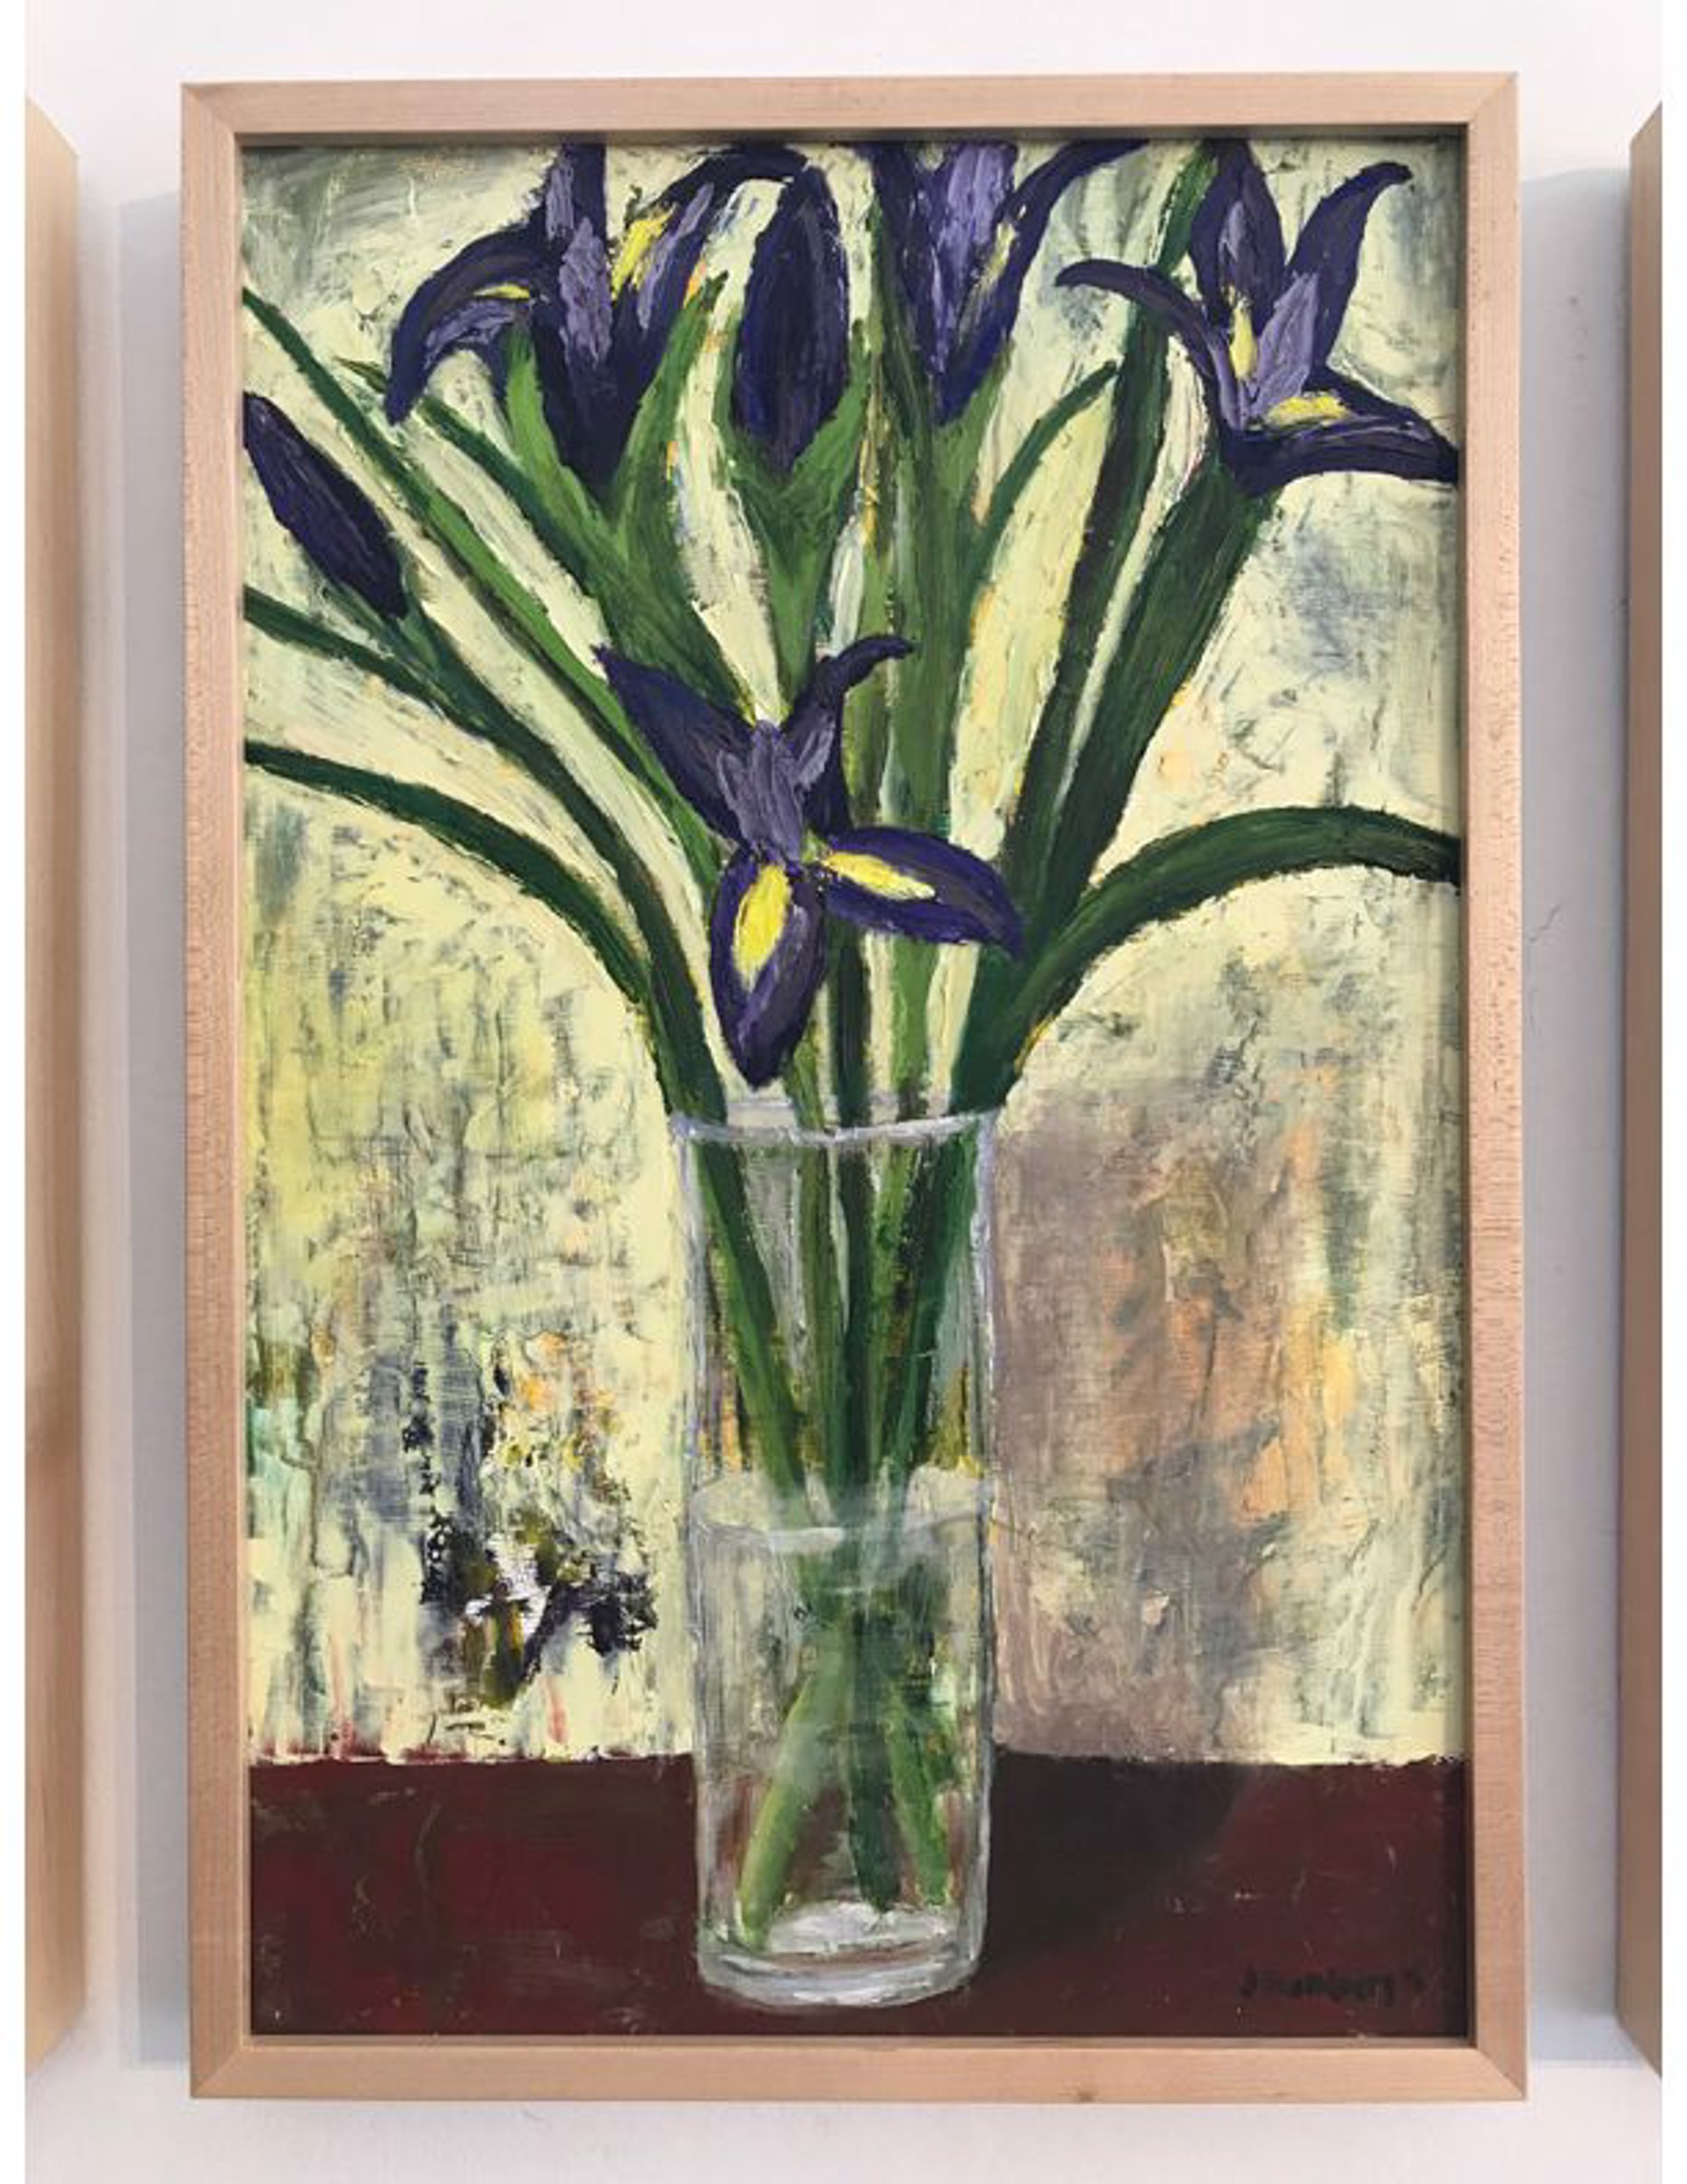 Irises by Jill Rothenberg-Simmons